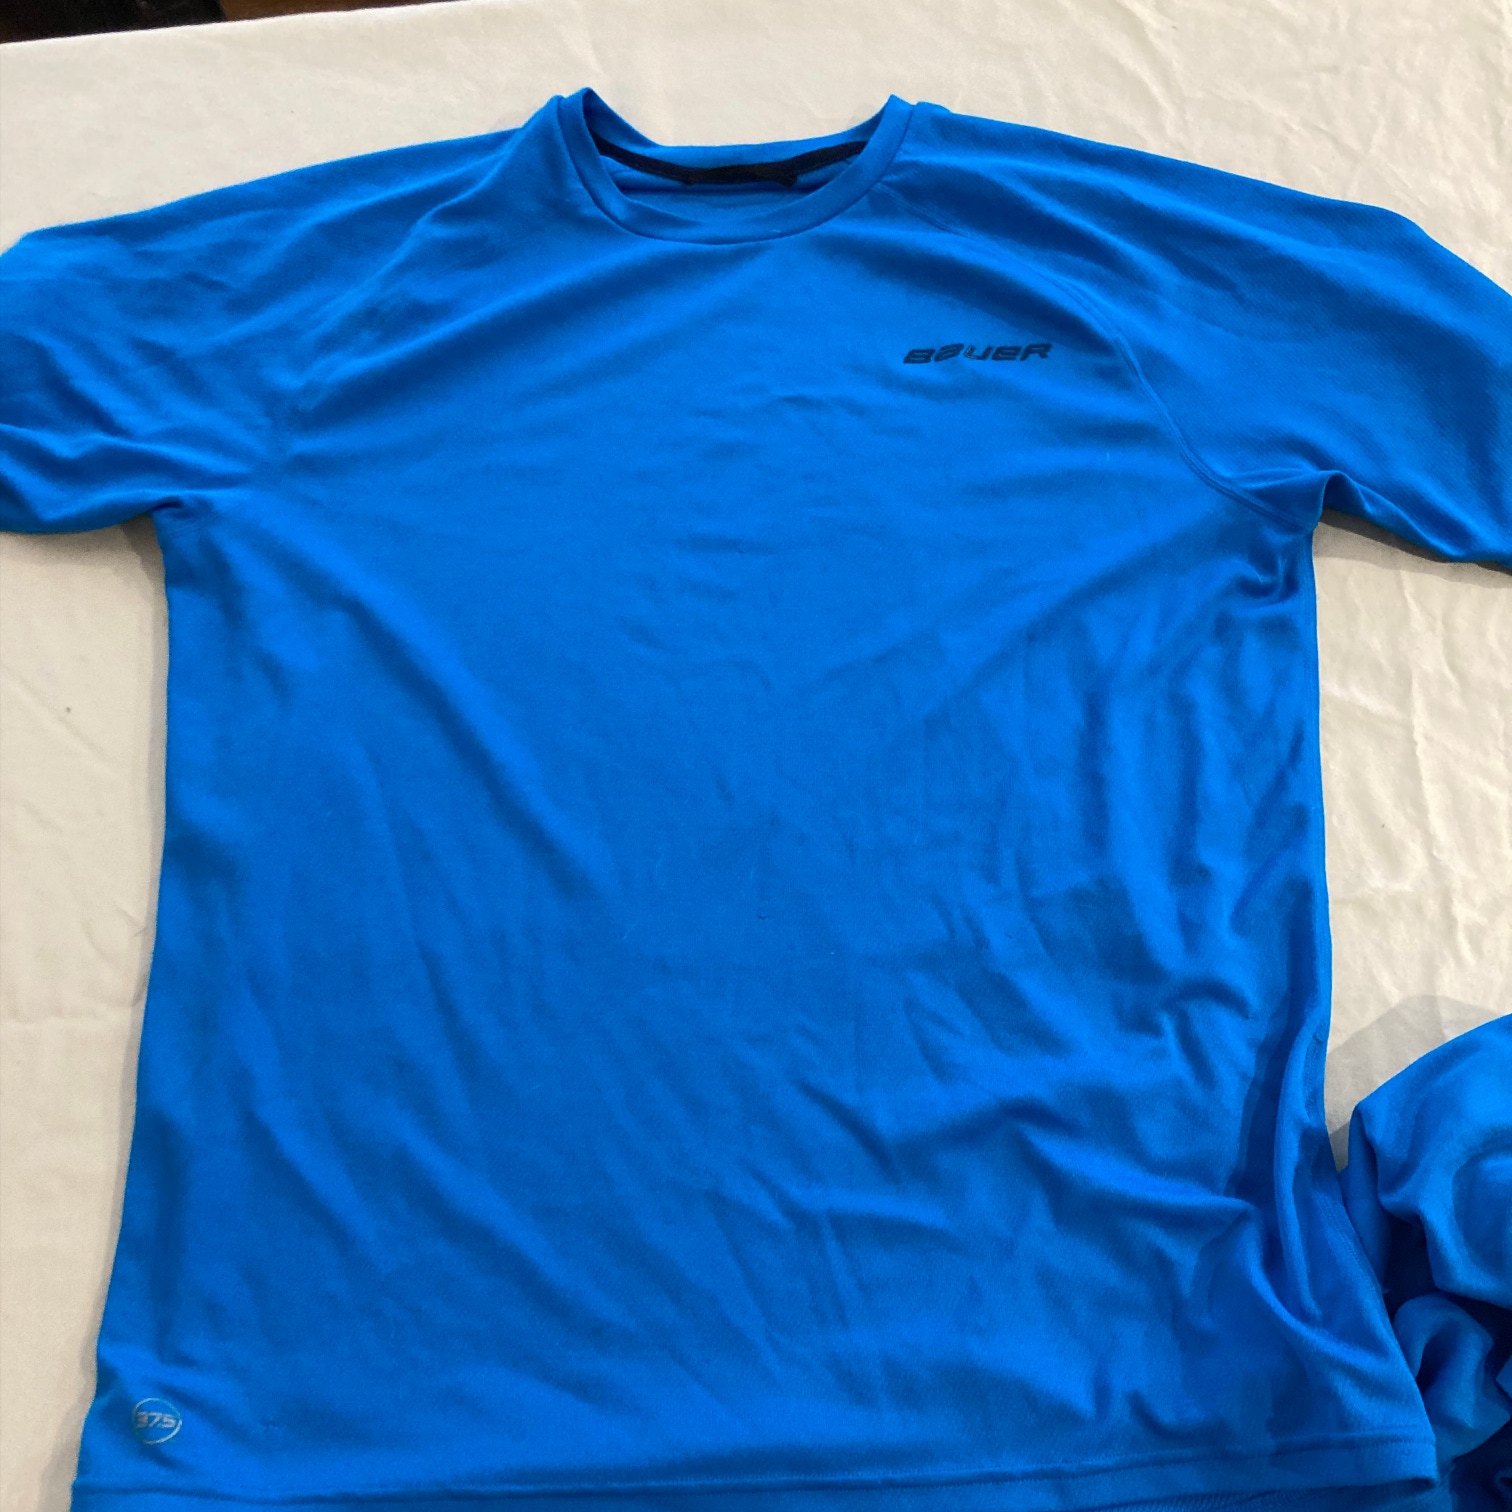 Blue Used Large Men's Shirt Bauer 37.5 training shirt 2 pack